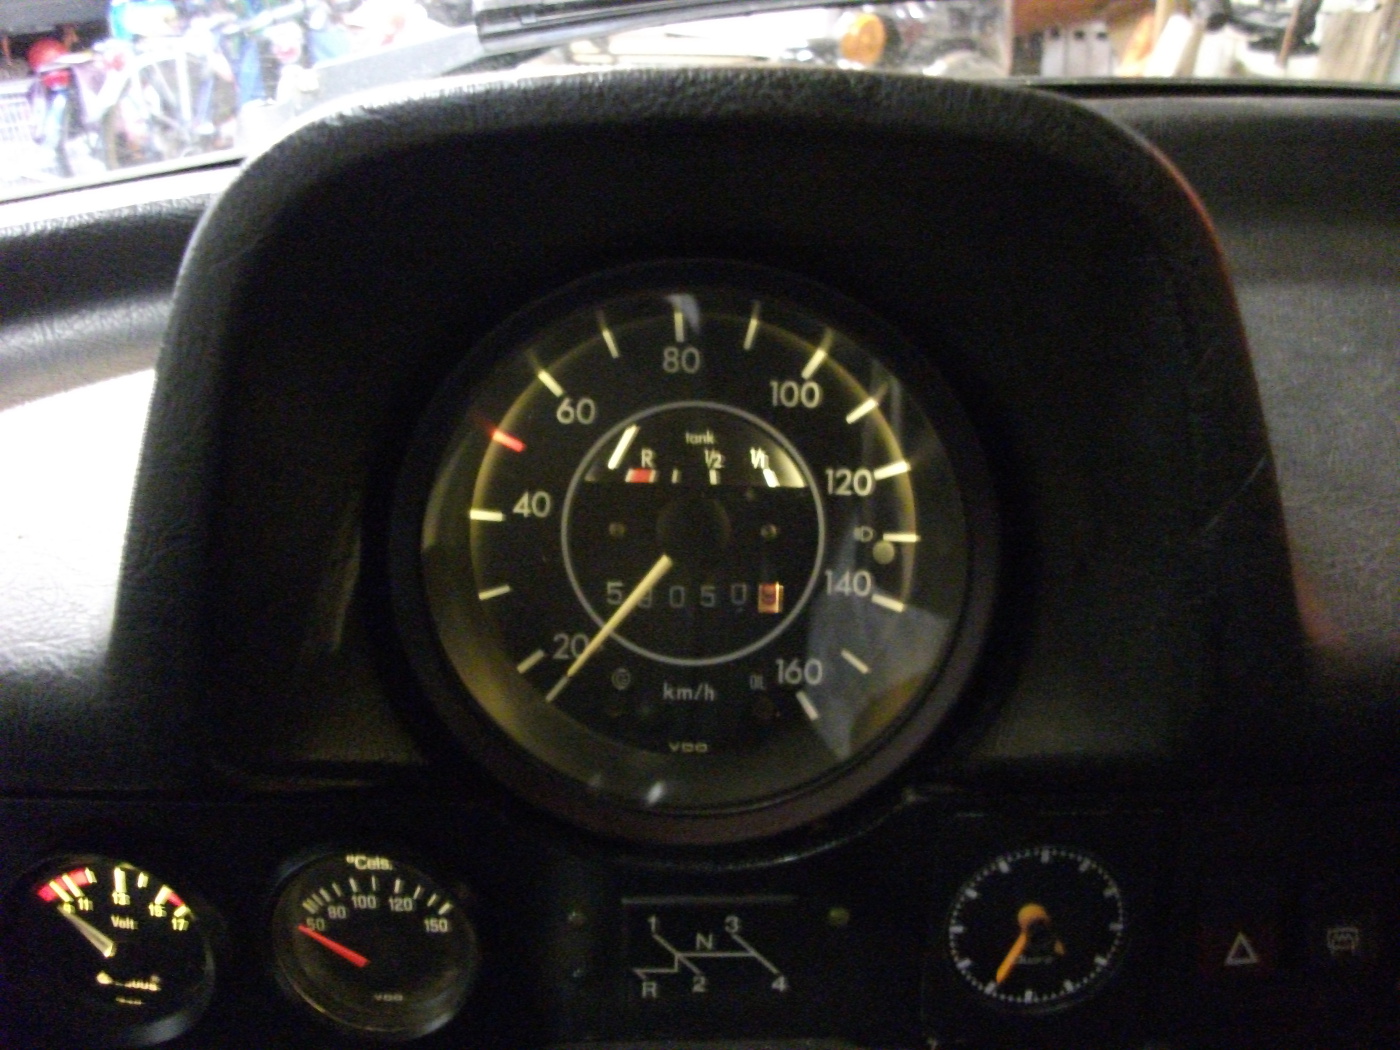 LED in VW speedometer installed